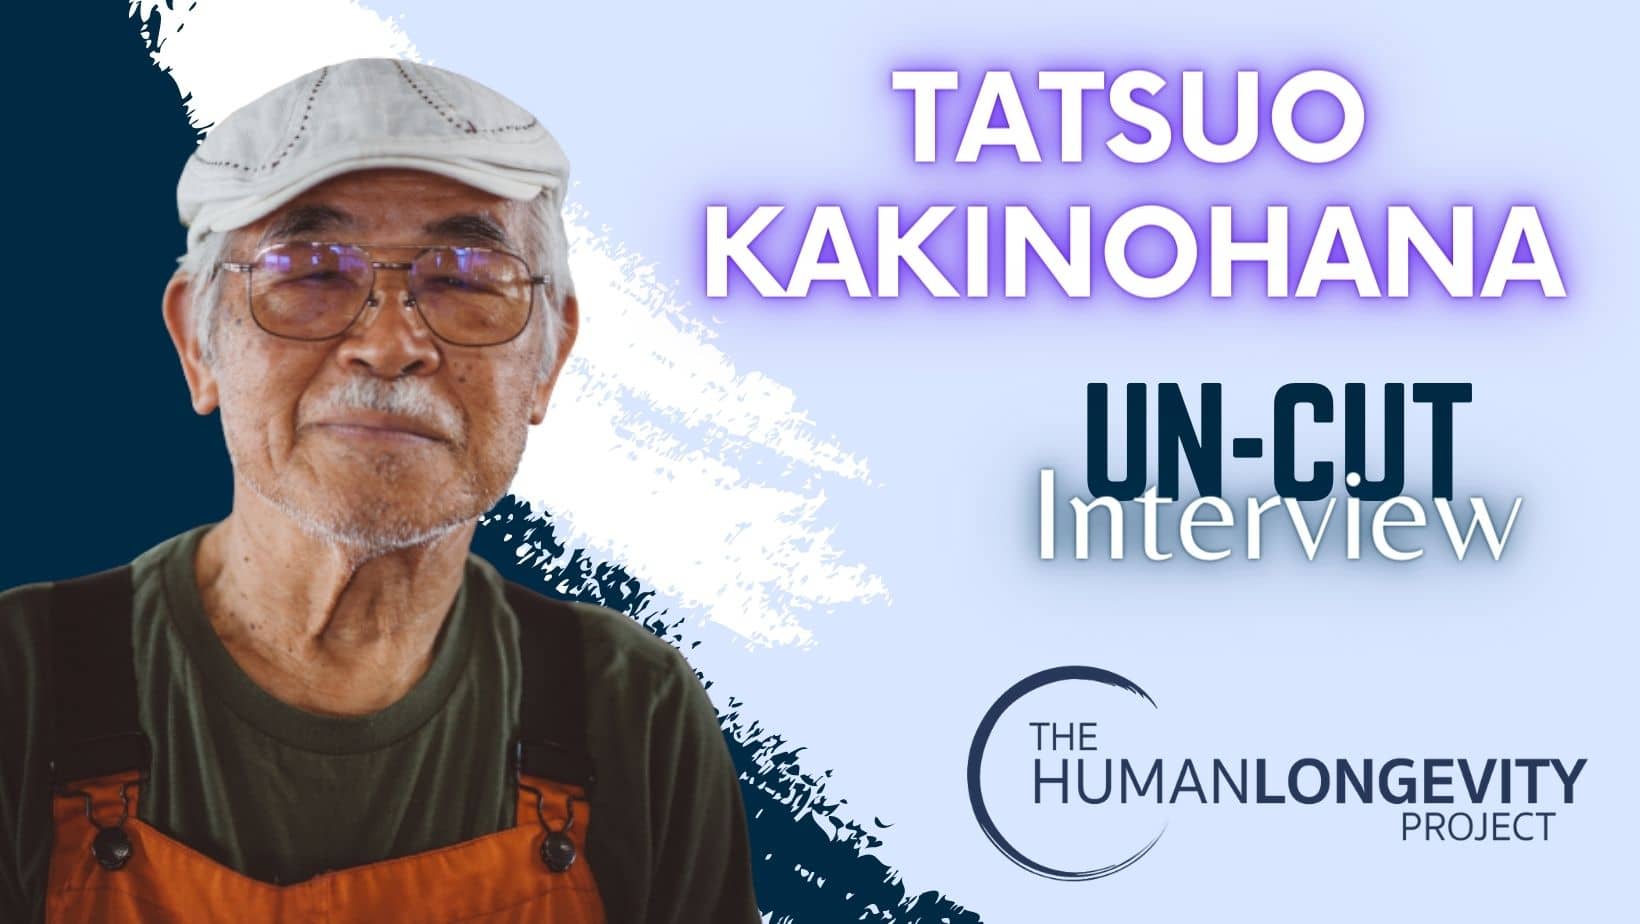 Human Longevity Project Uncut Interview With Tatsuo Kakinohana